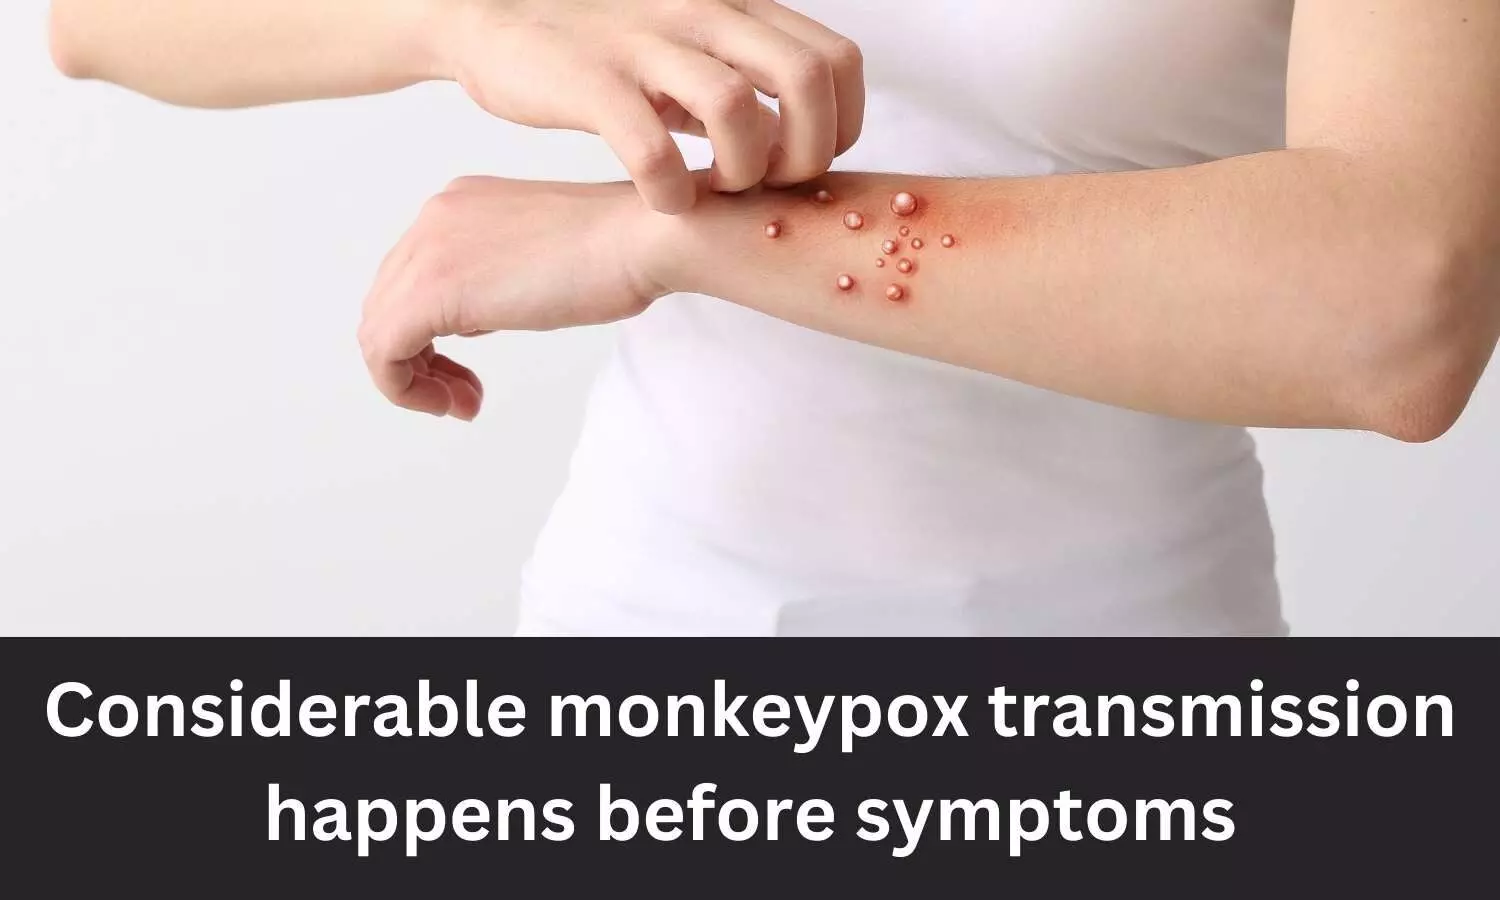 Considerable monkeypox transmission happens before symptoms: Study